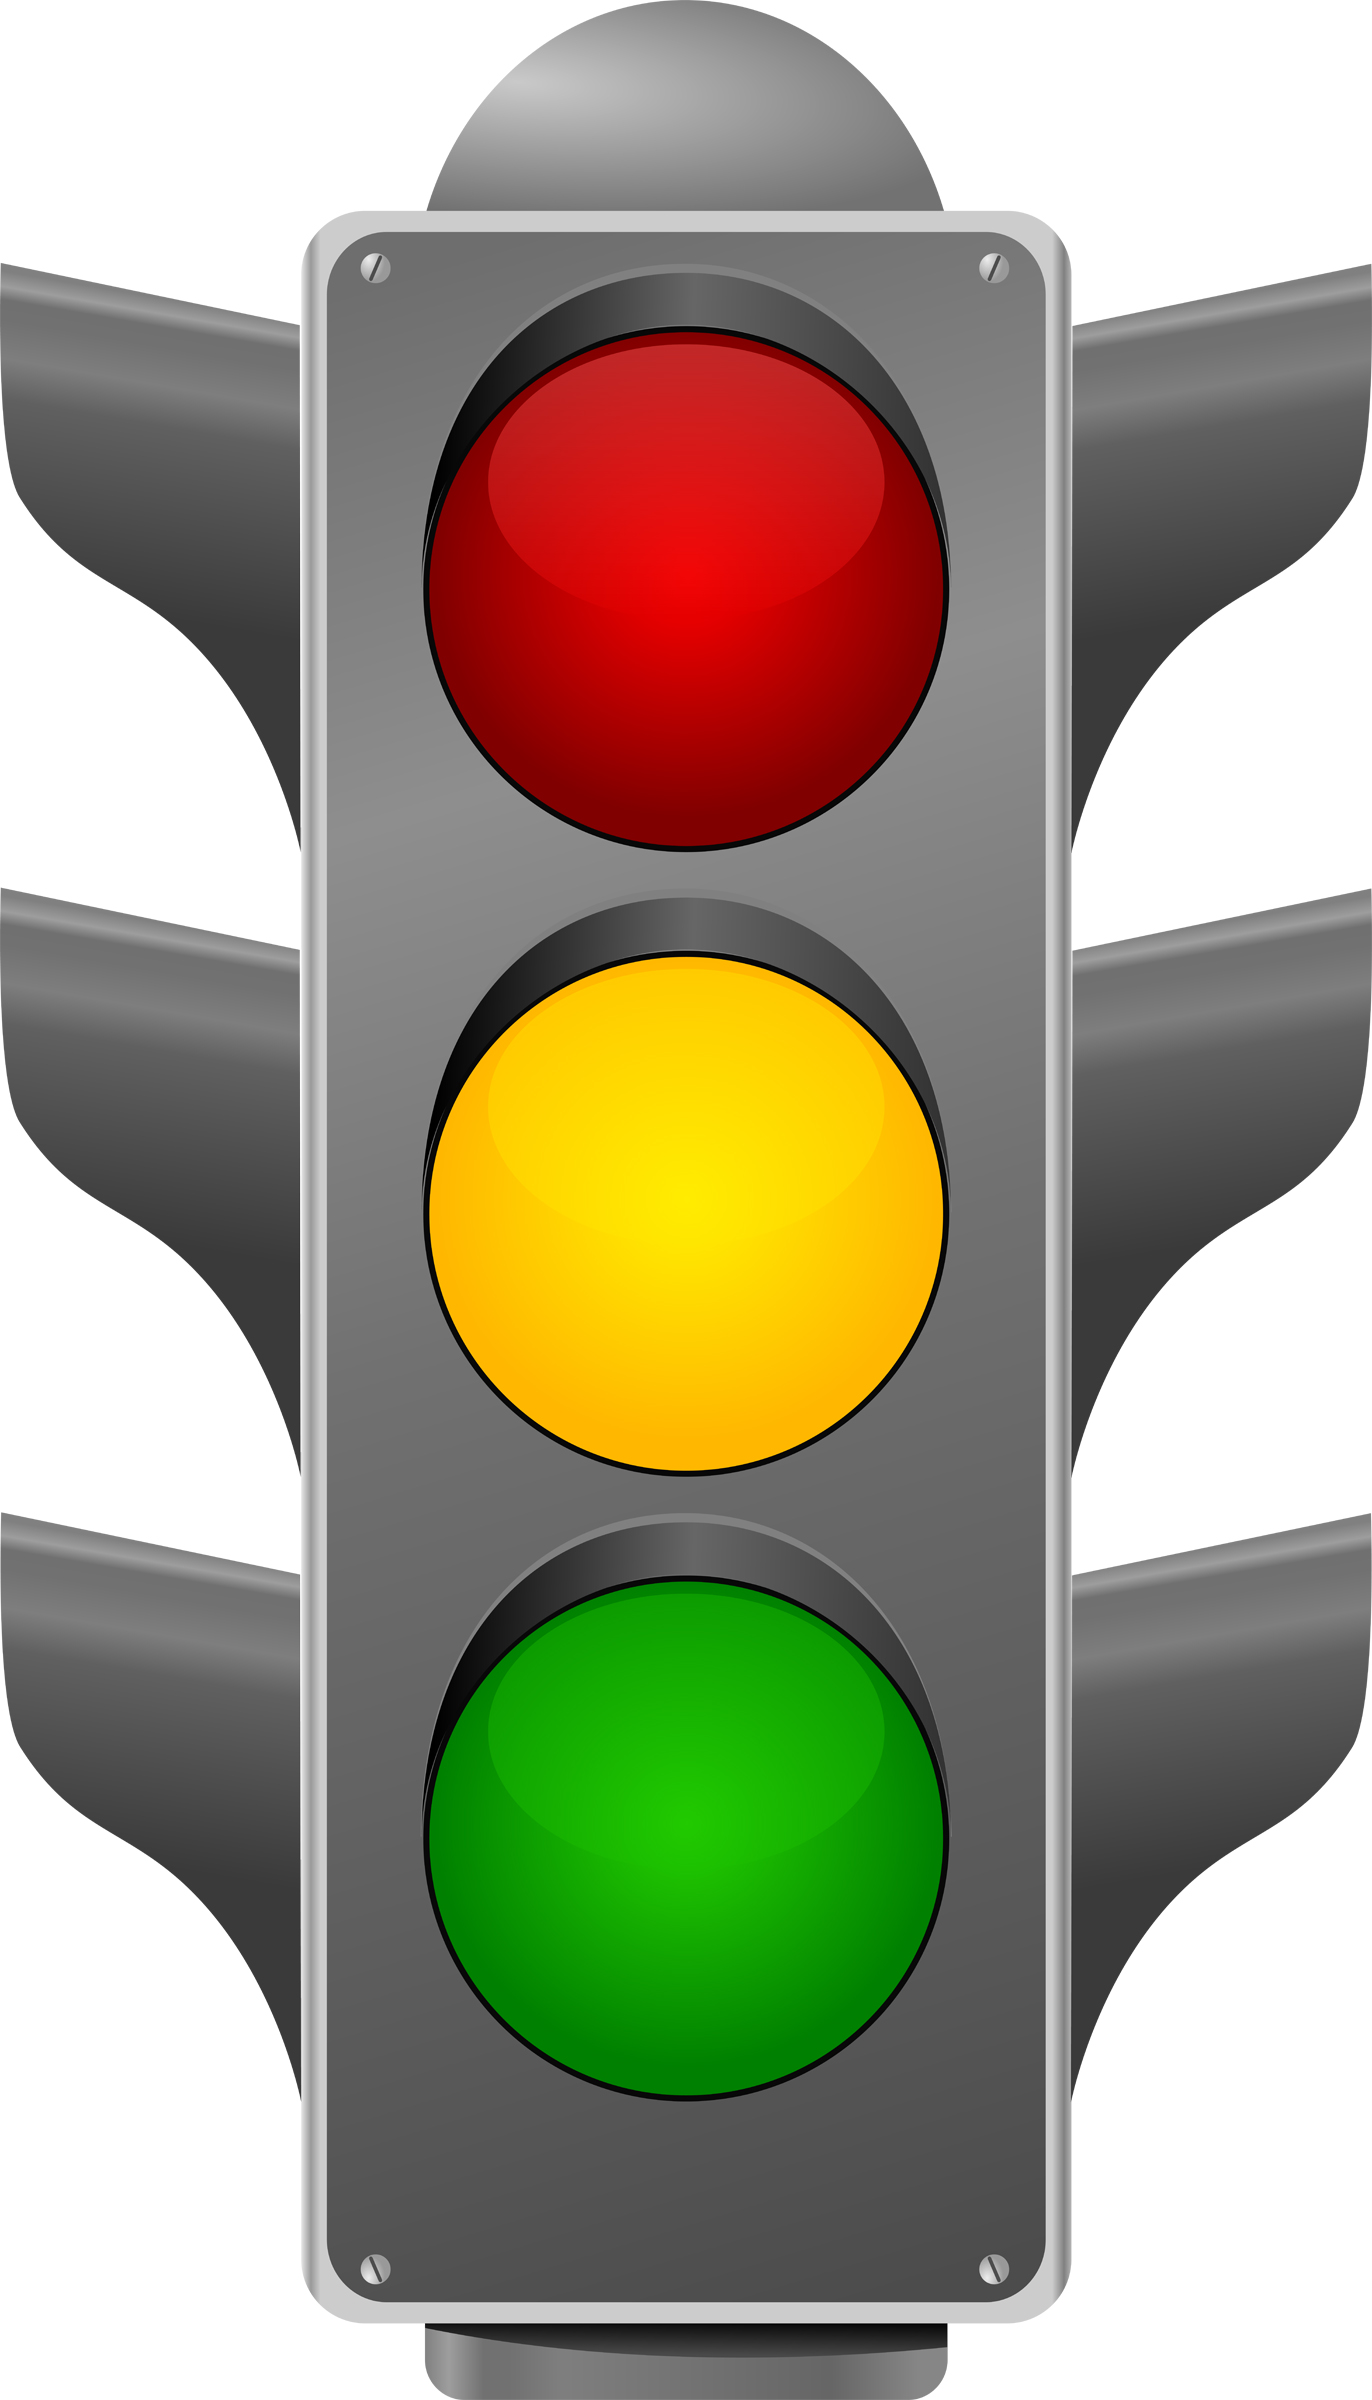 Images For > Traffic Light Clip Art Png